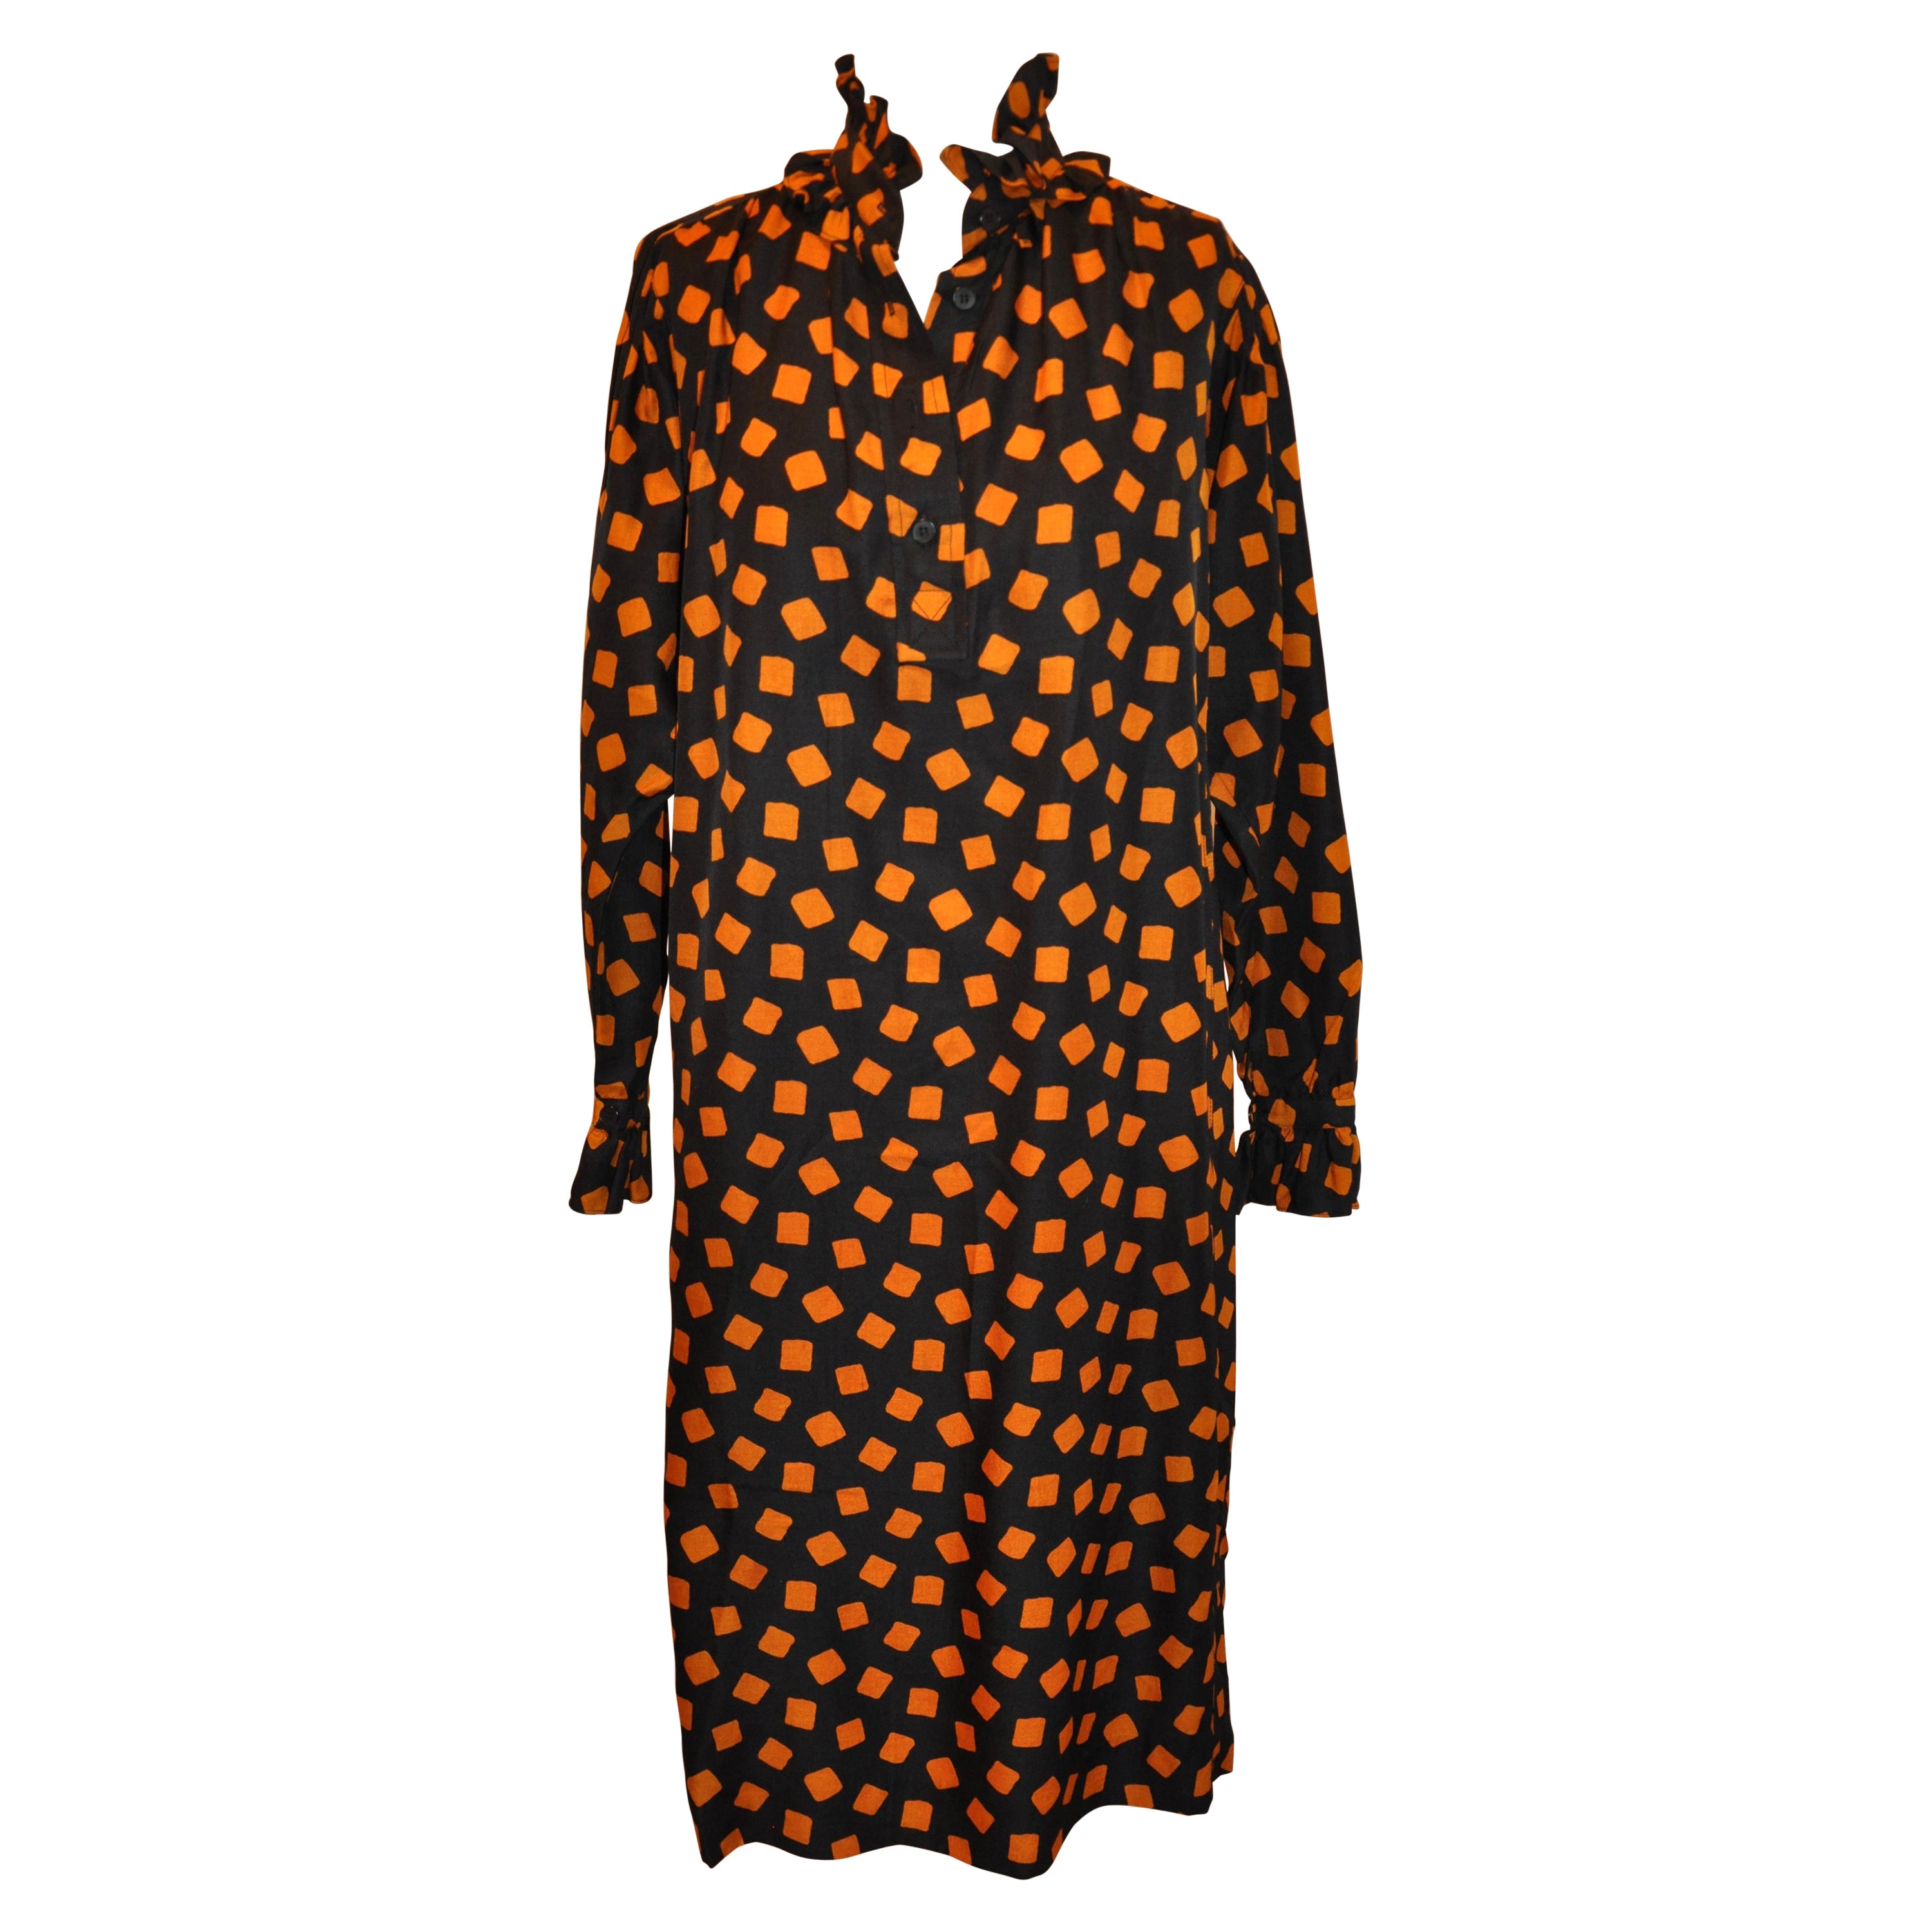 Yves Saint Laurent Ruffled Black w/Warm Brown Silk Dress